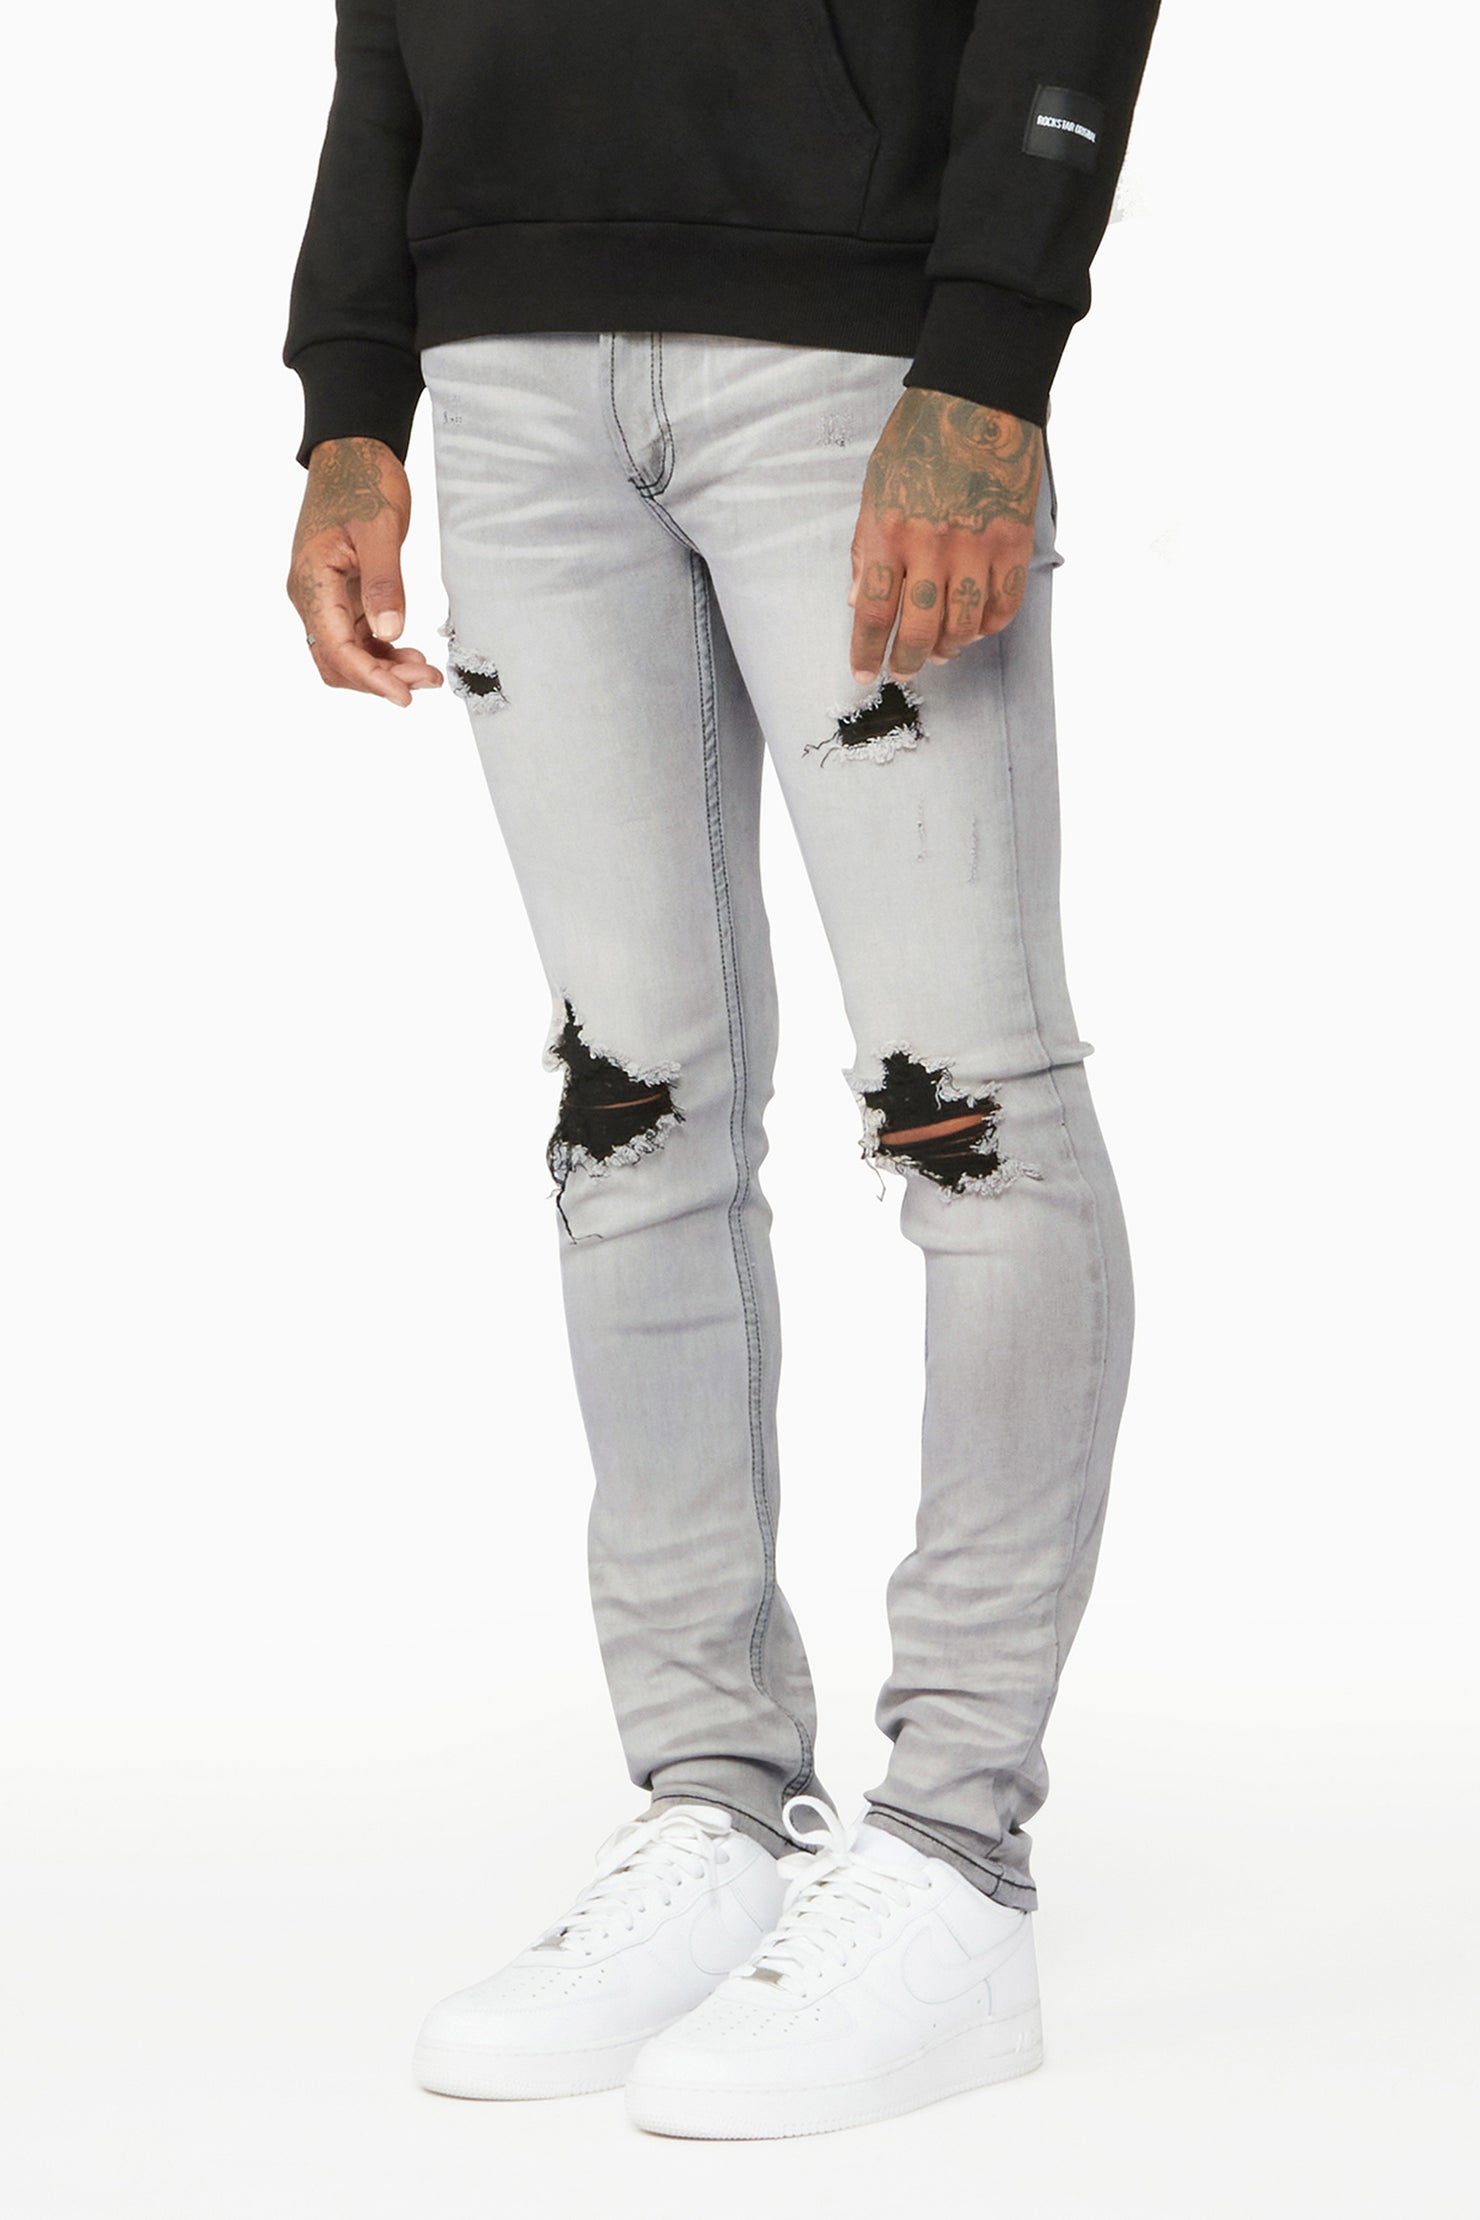 Men's Fashion Jeans– Rockstar Original